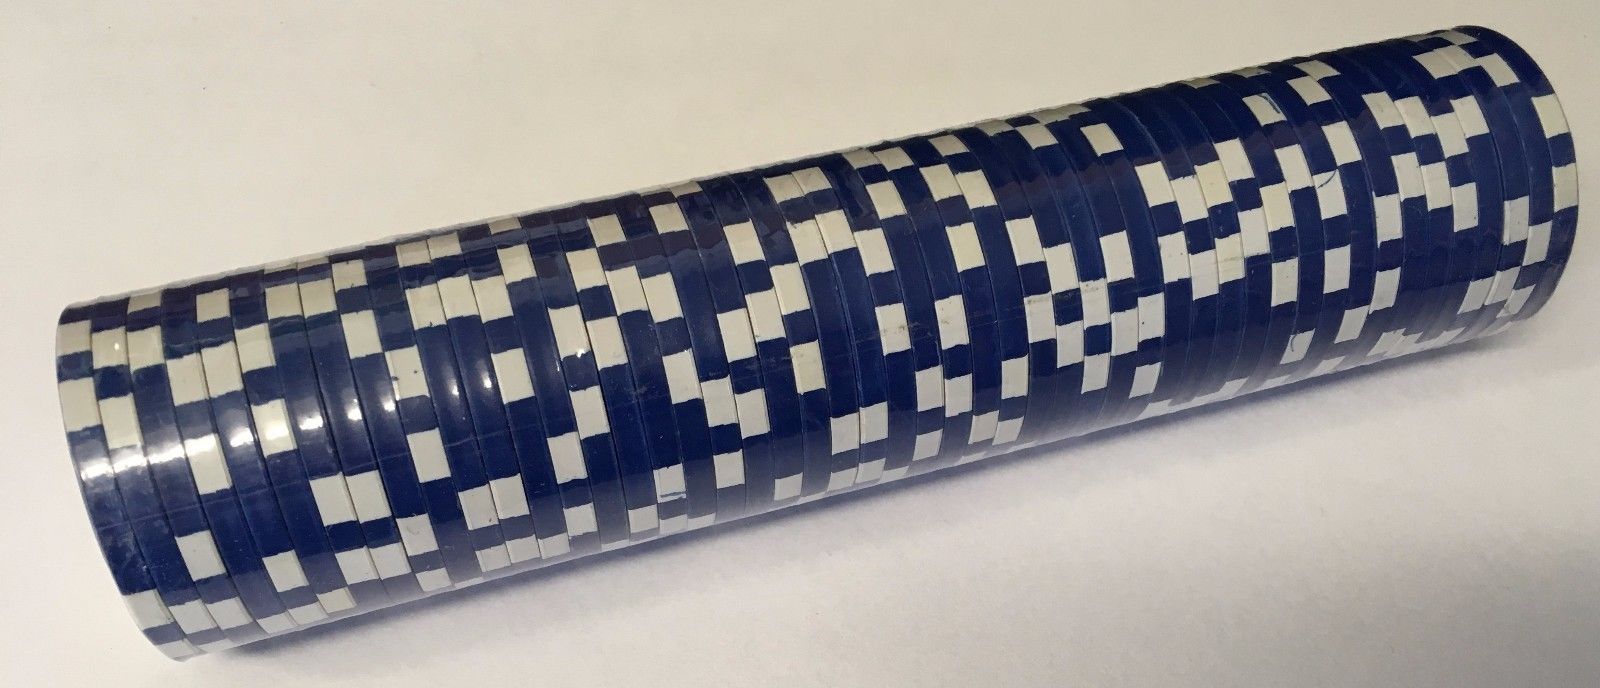 RDR Casino Poker Chips 11.25 G Blue Aces Pro Series 50pcs 50$